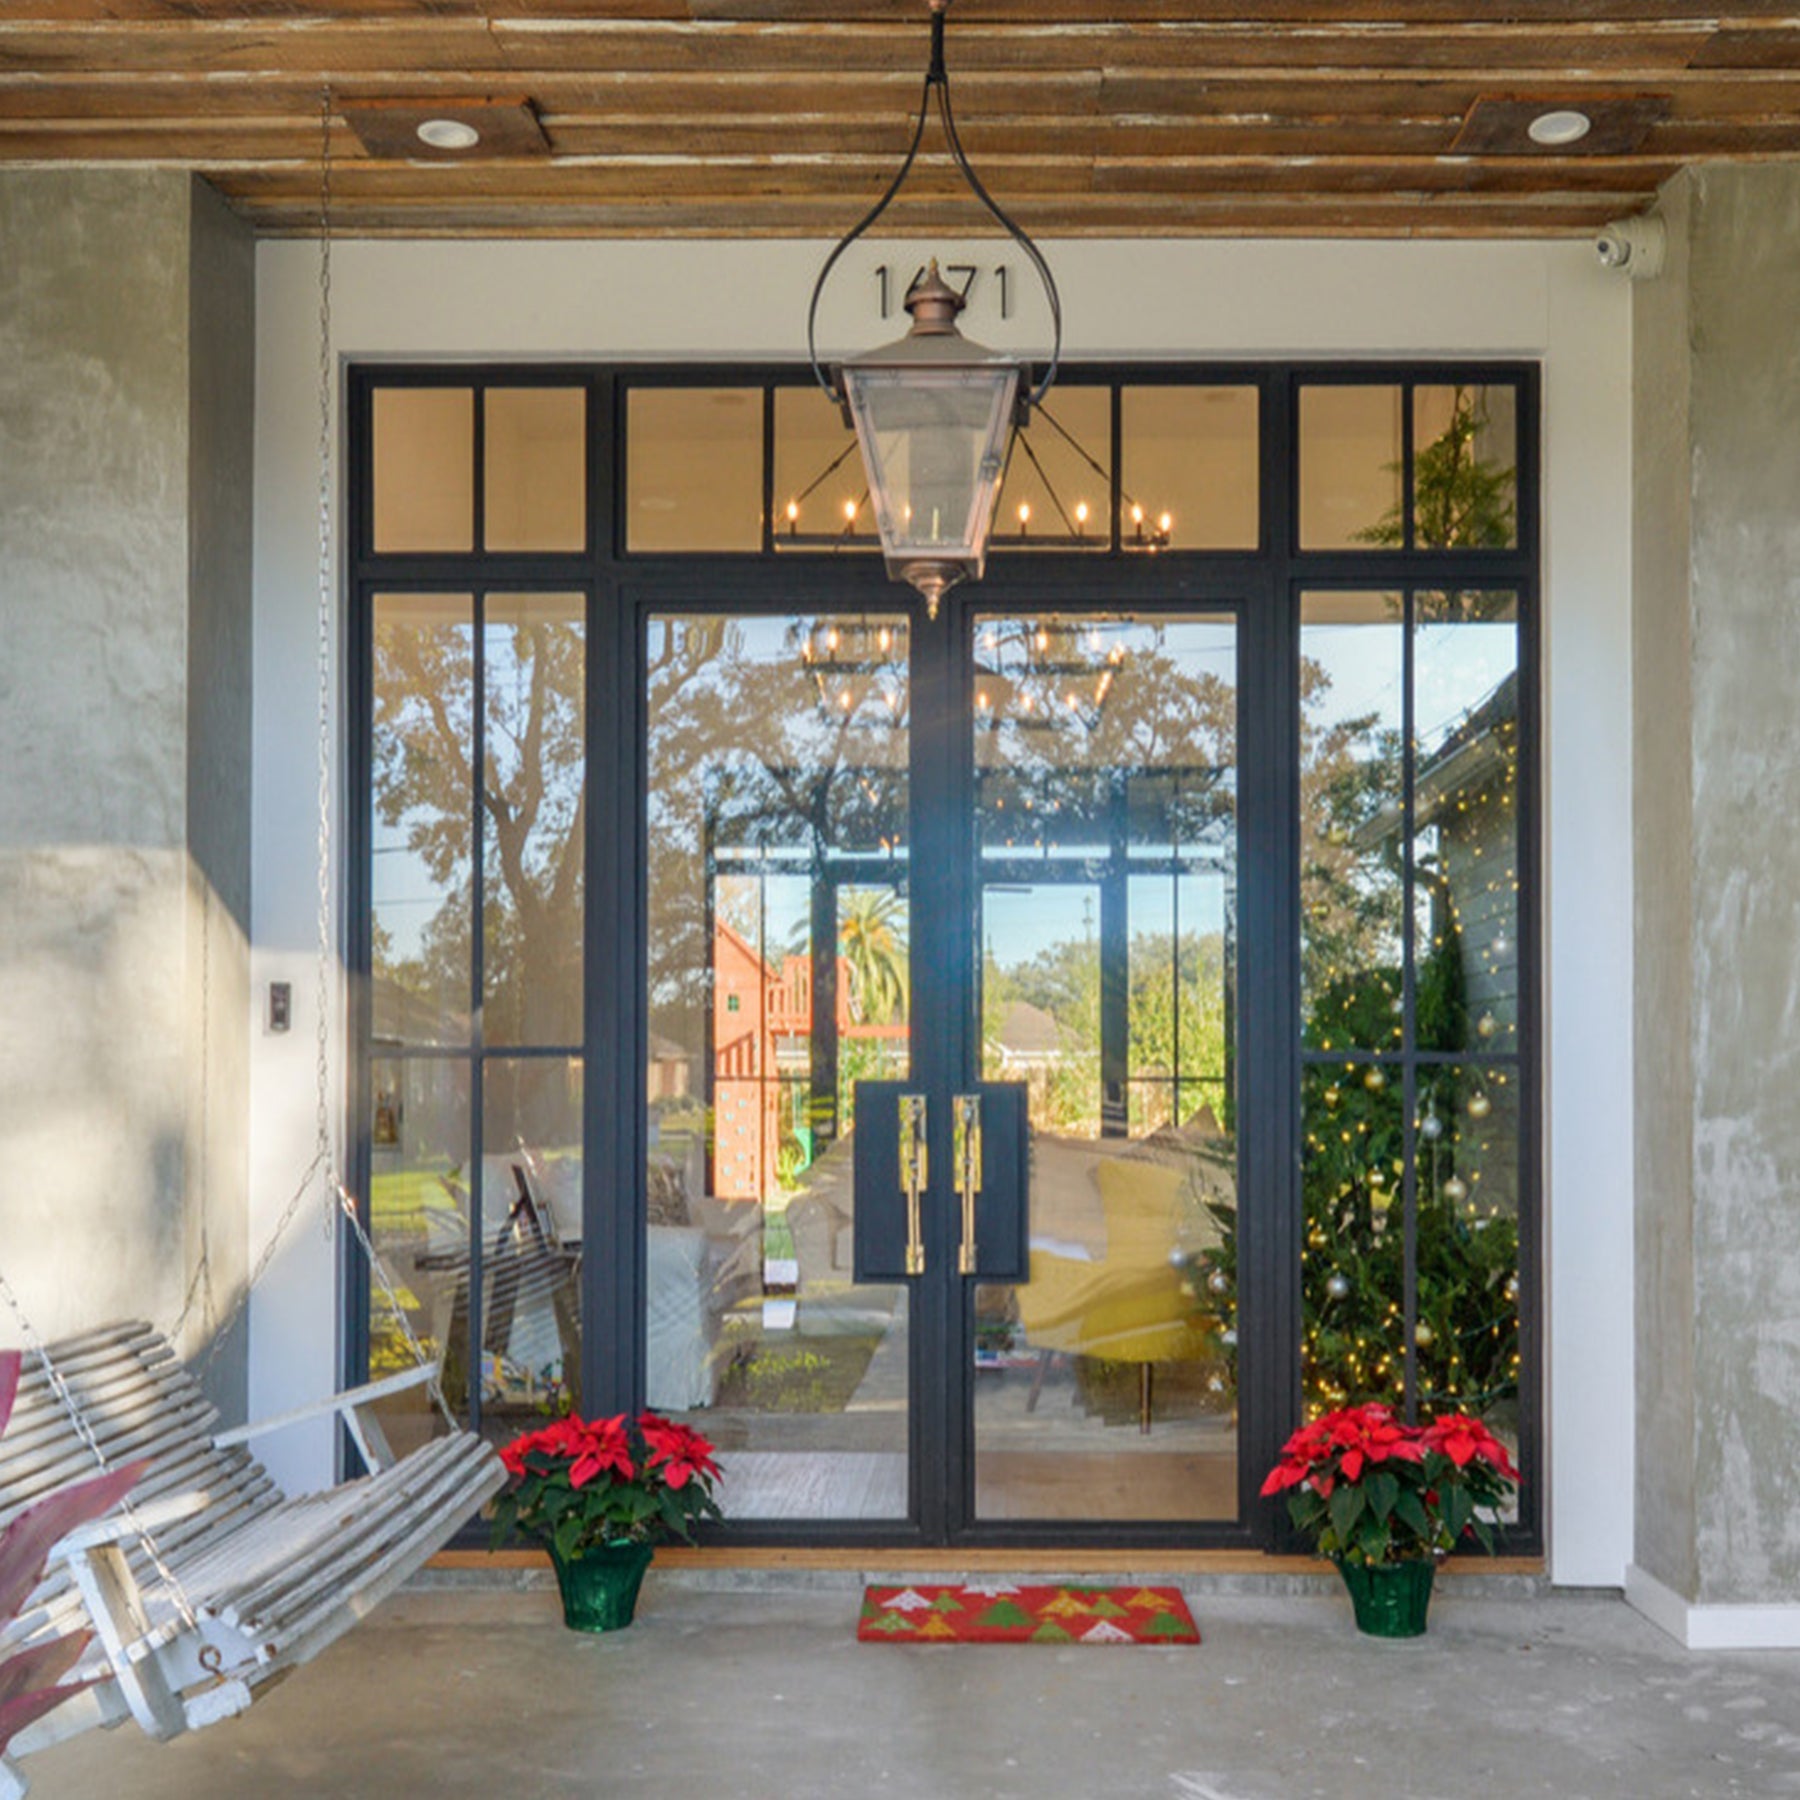 gloryirondoors insulated wrought steel double doors with glass panel